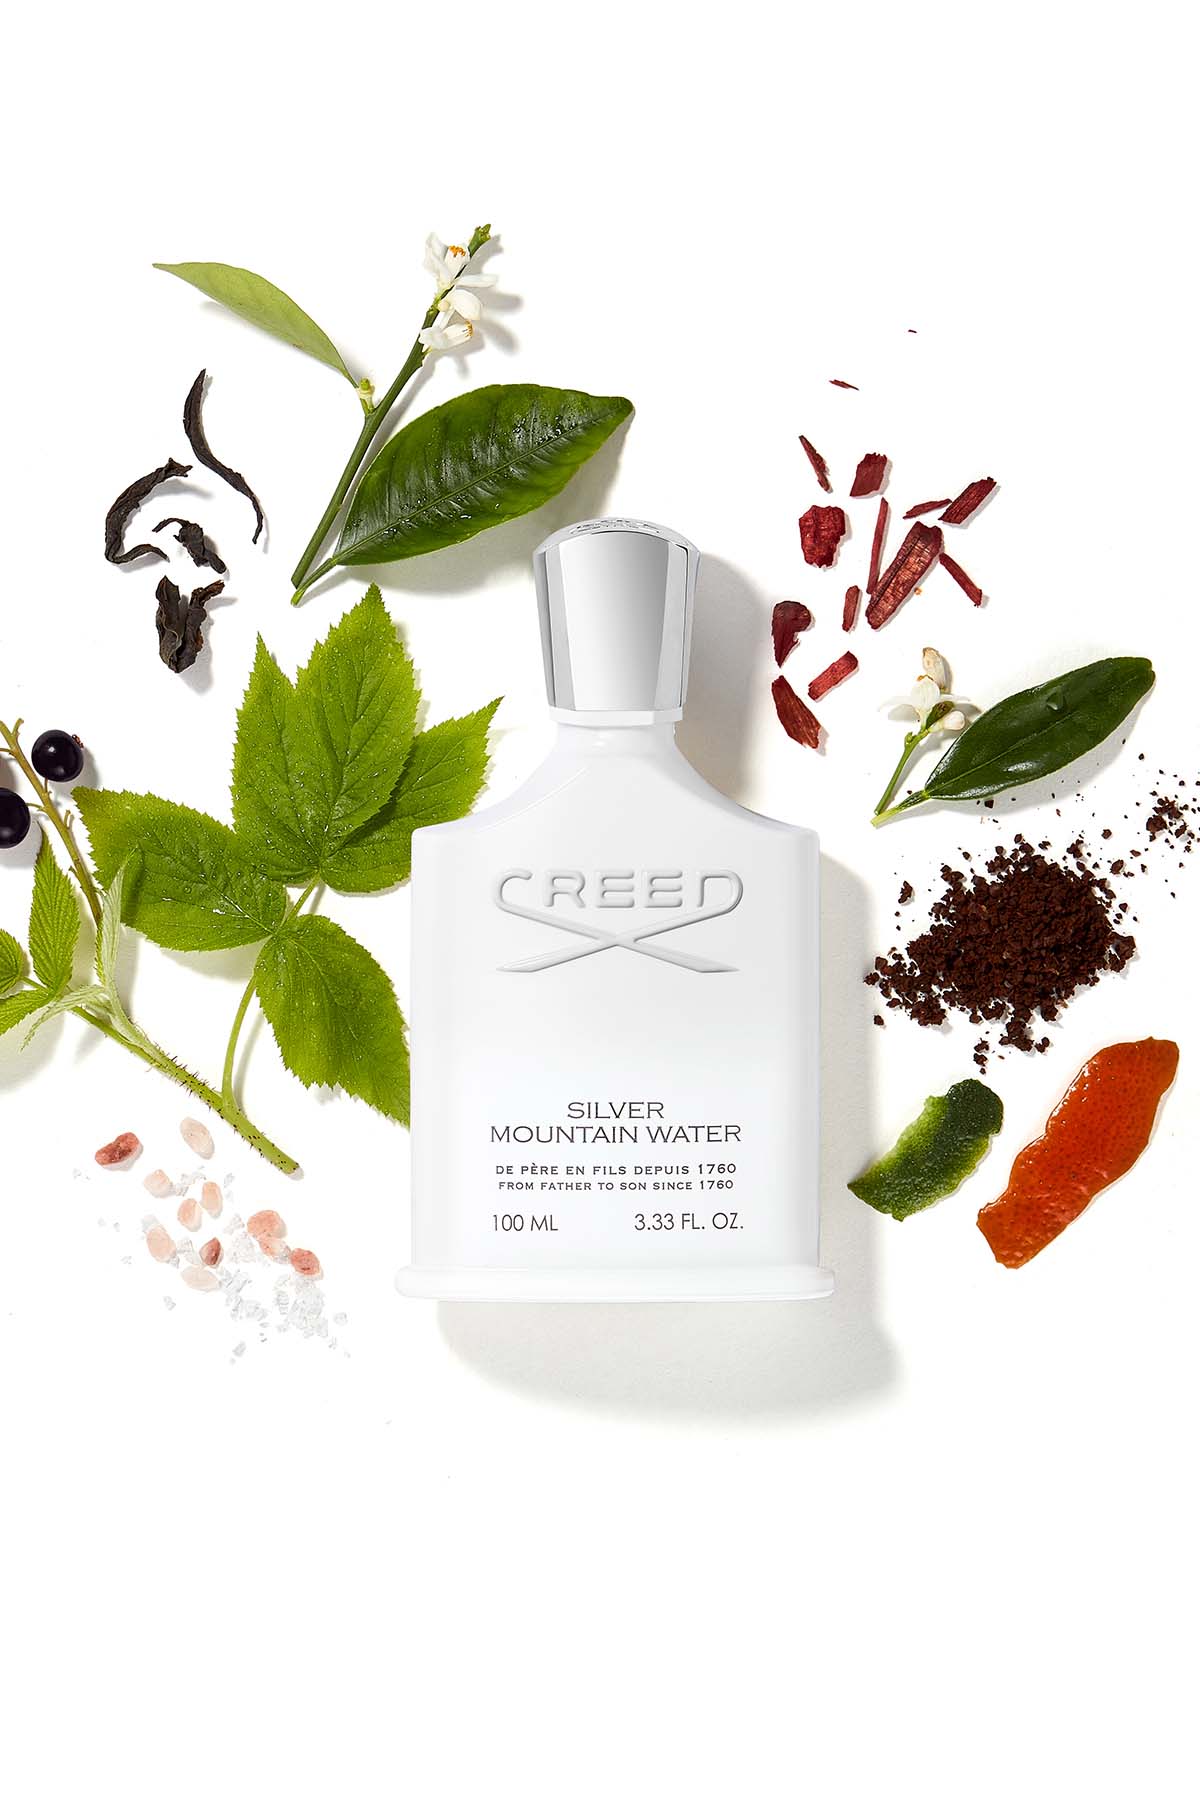 Creed Silver Mountain Water Eau de Parfum Ingredients